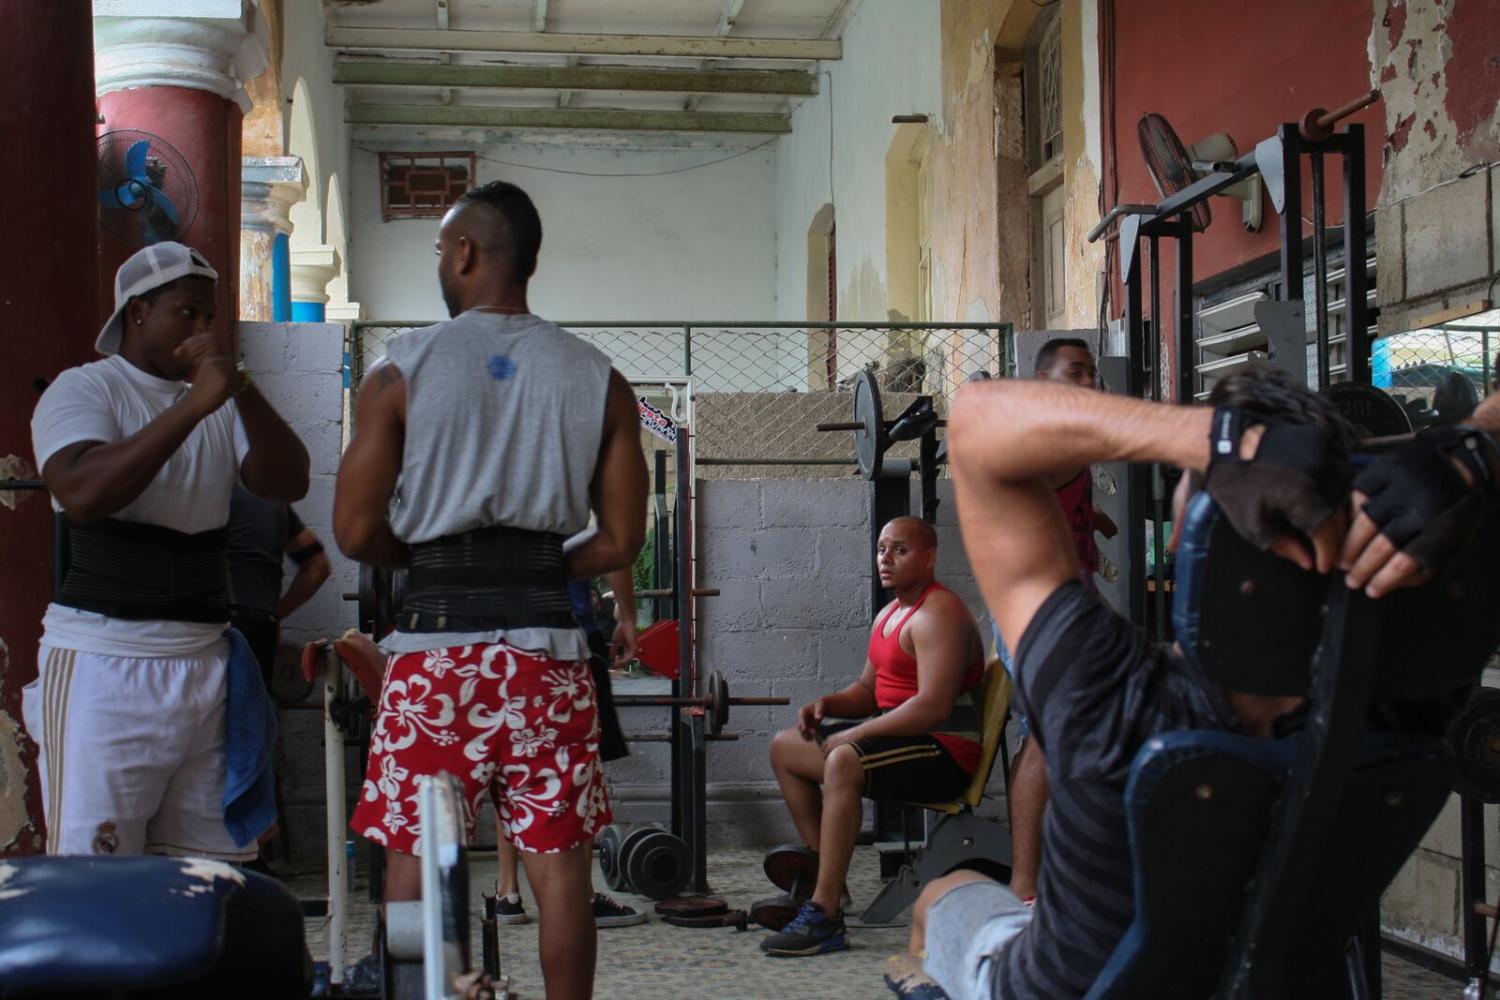 Fitness culture in Cuba